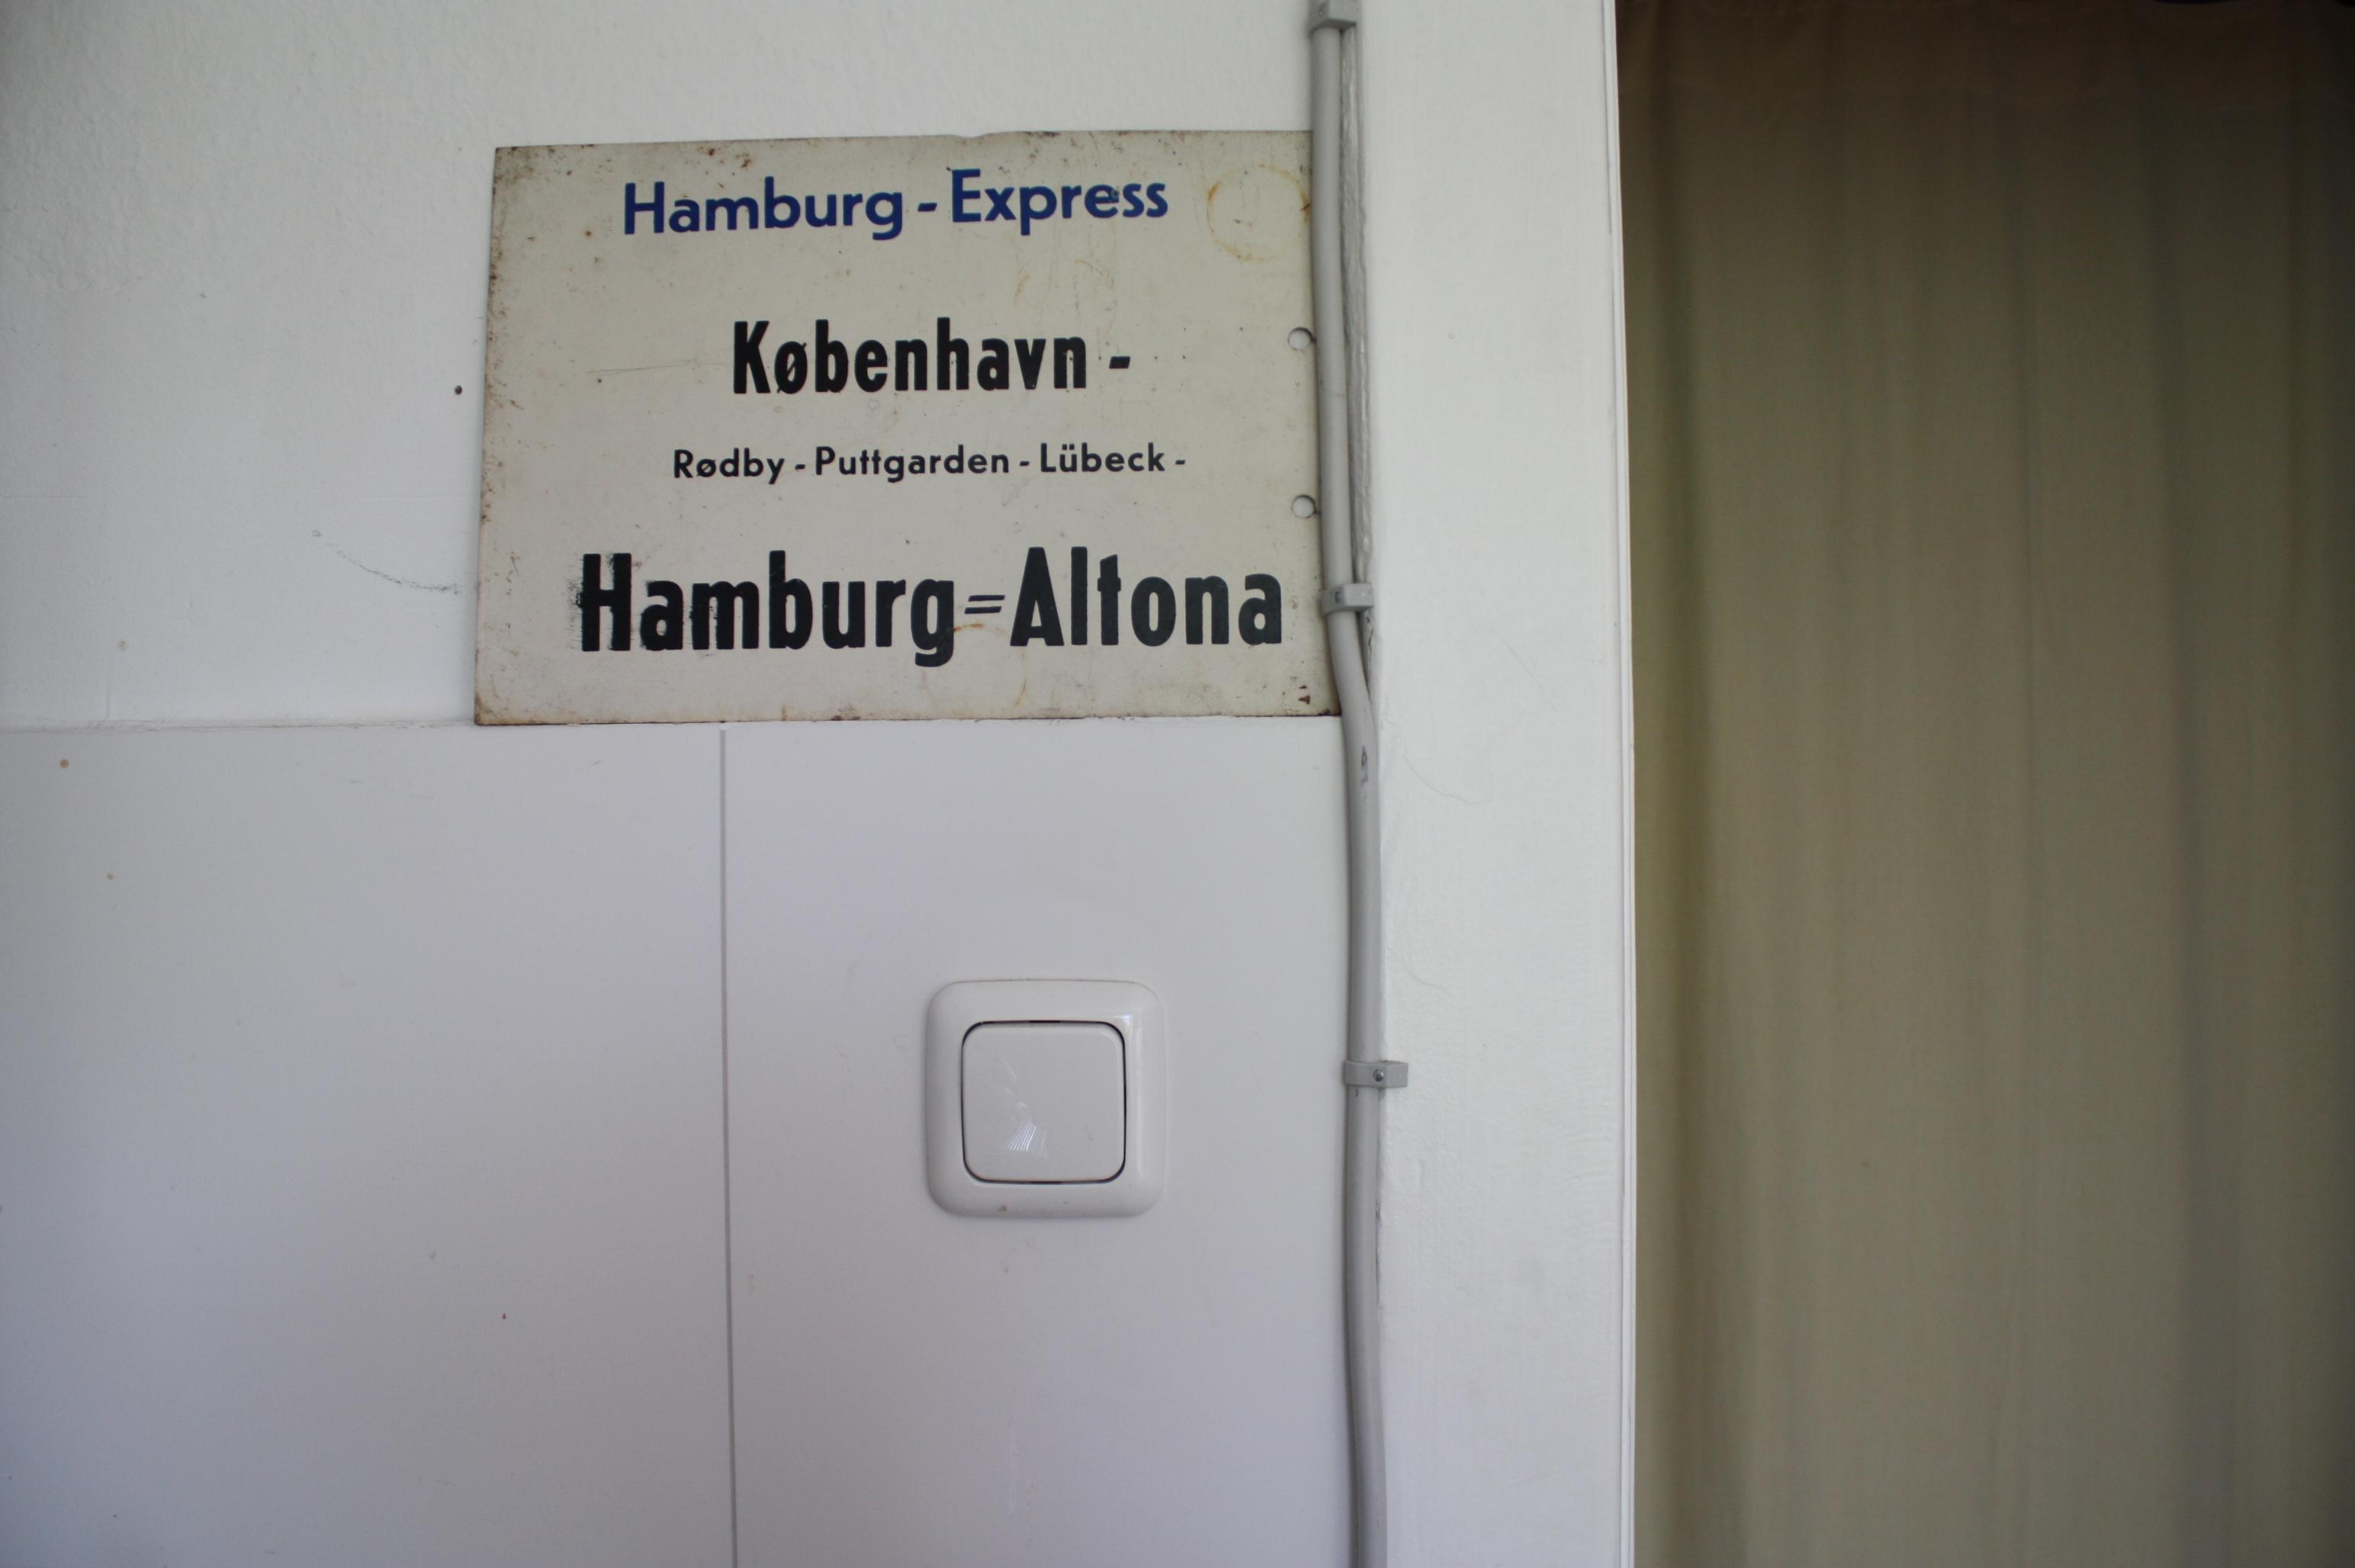 Küchenträume.
#Hamburg ' Kopenhagen #dänischesdesign #scandinavianstyle #zitronengelb